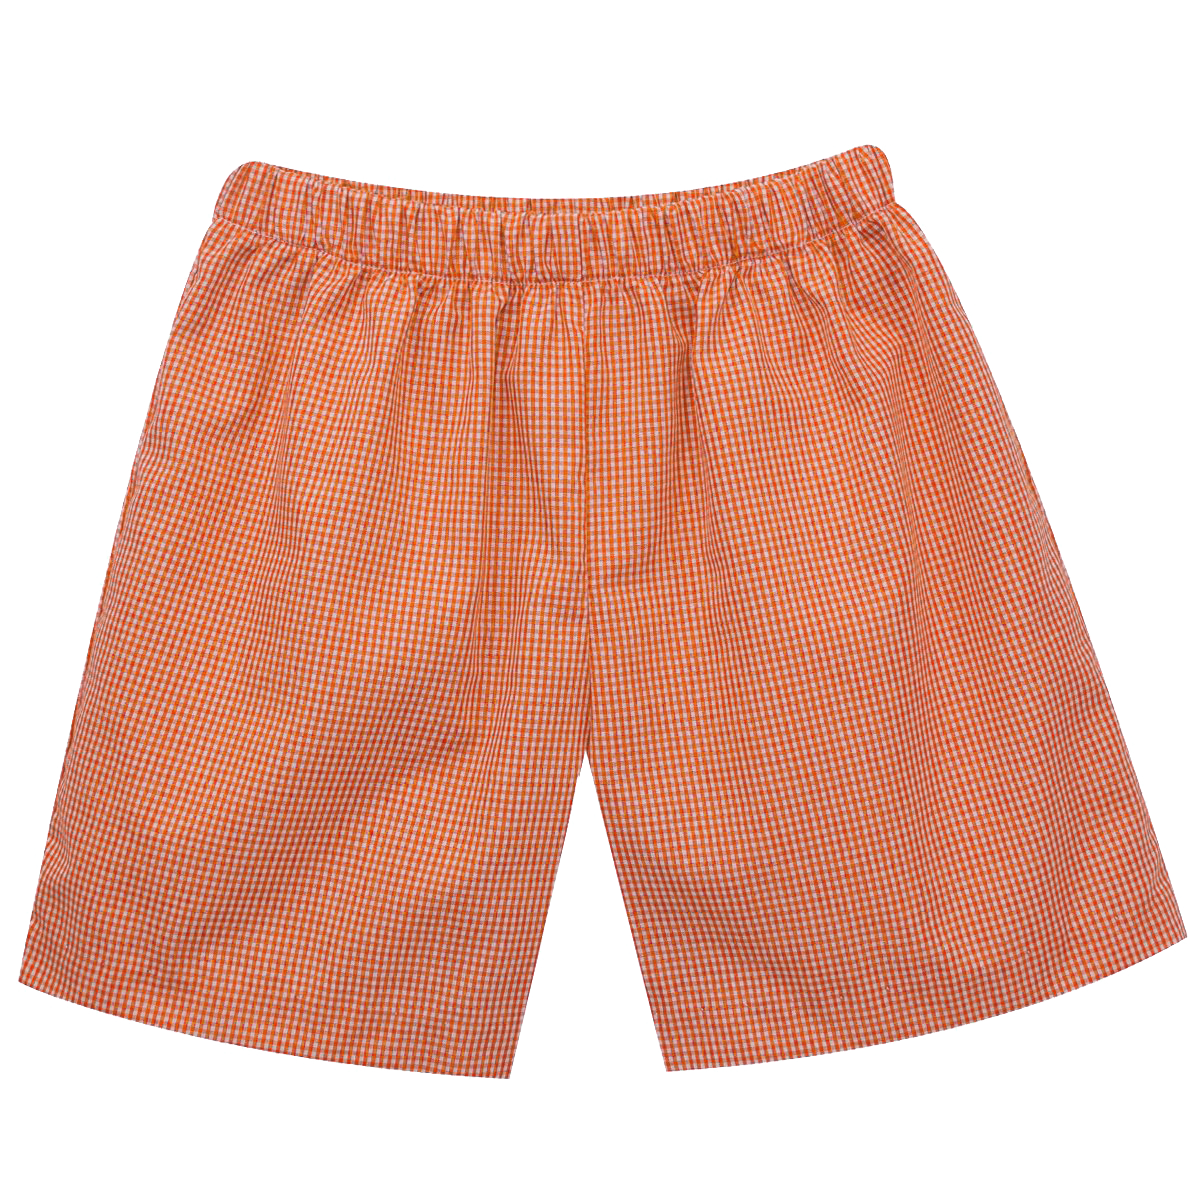 Vive La Fete Orange Check Gingham Shorts